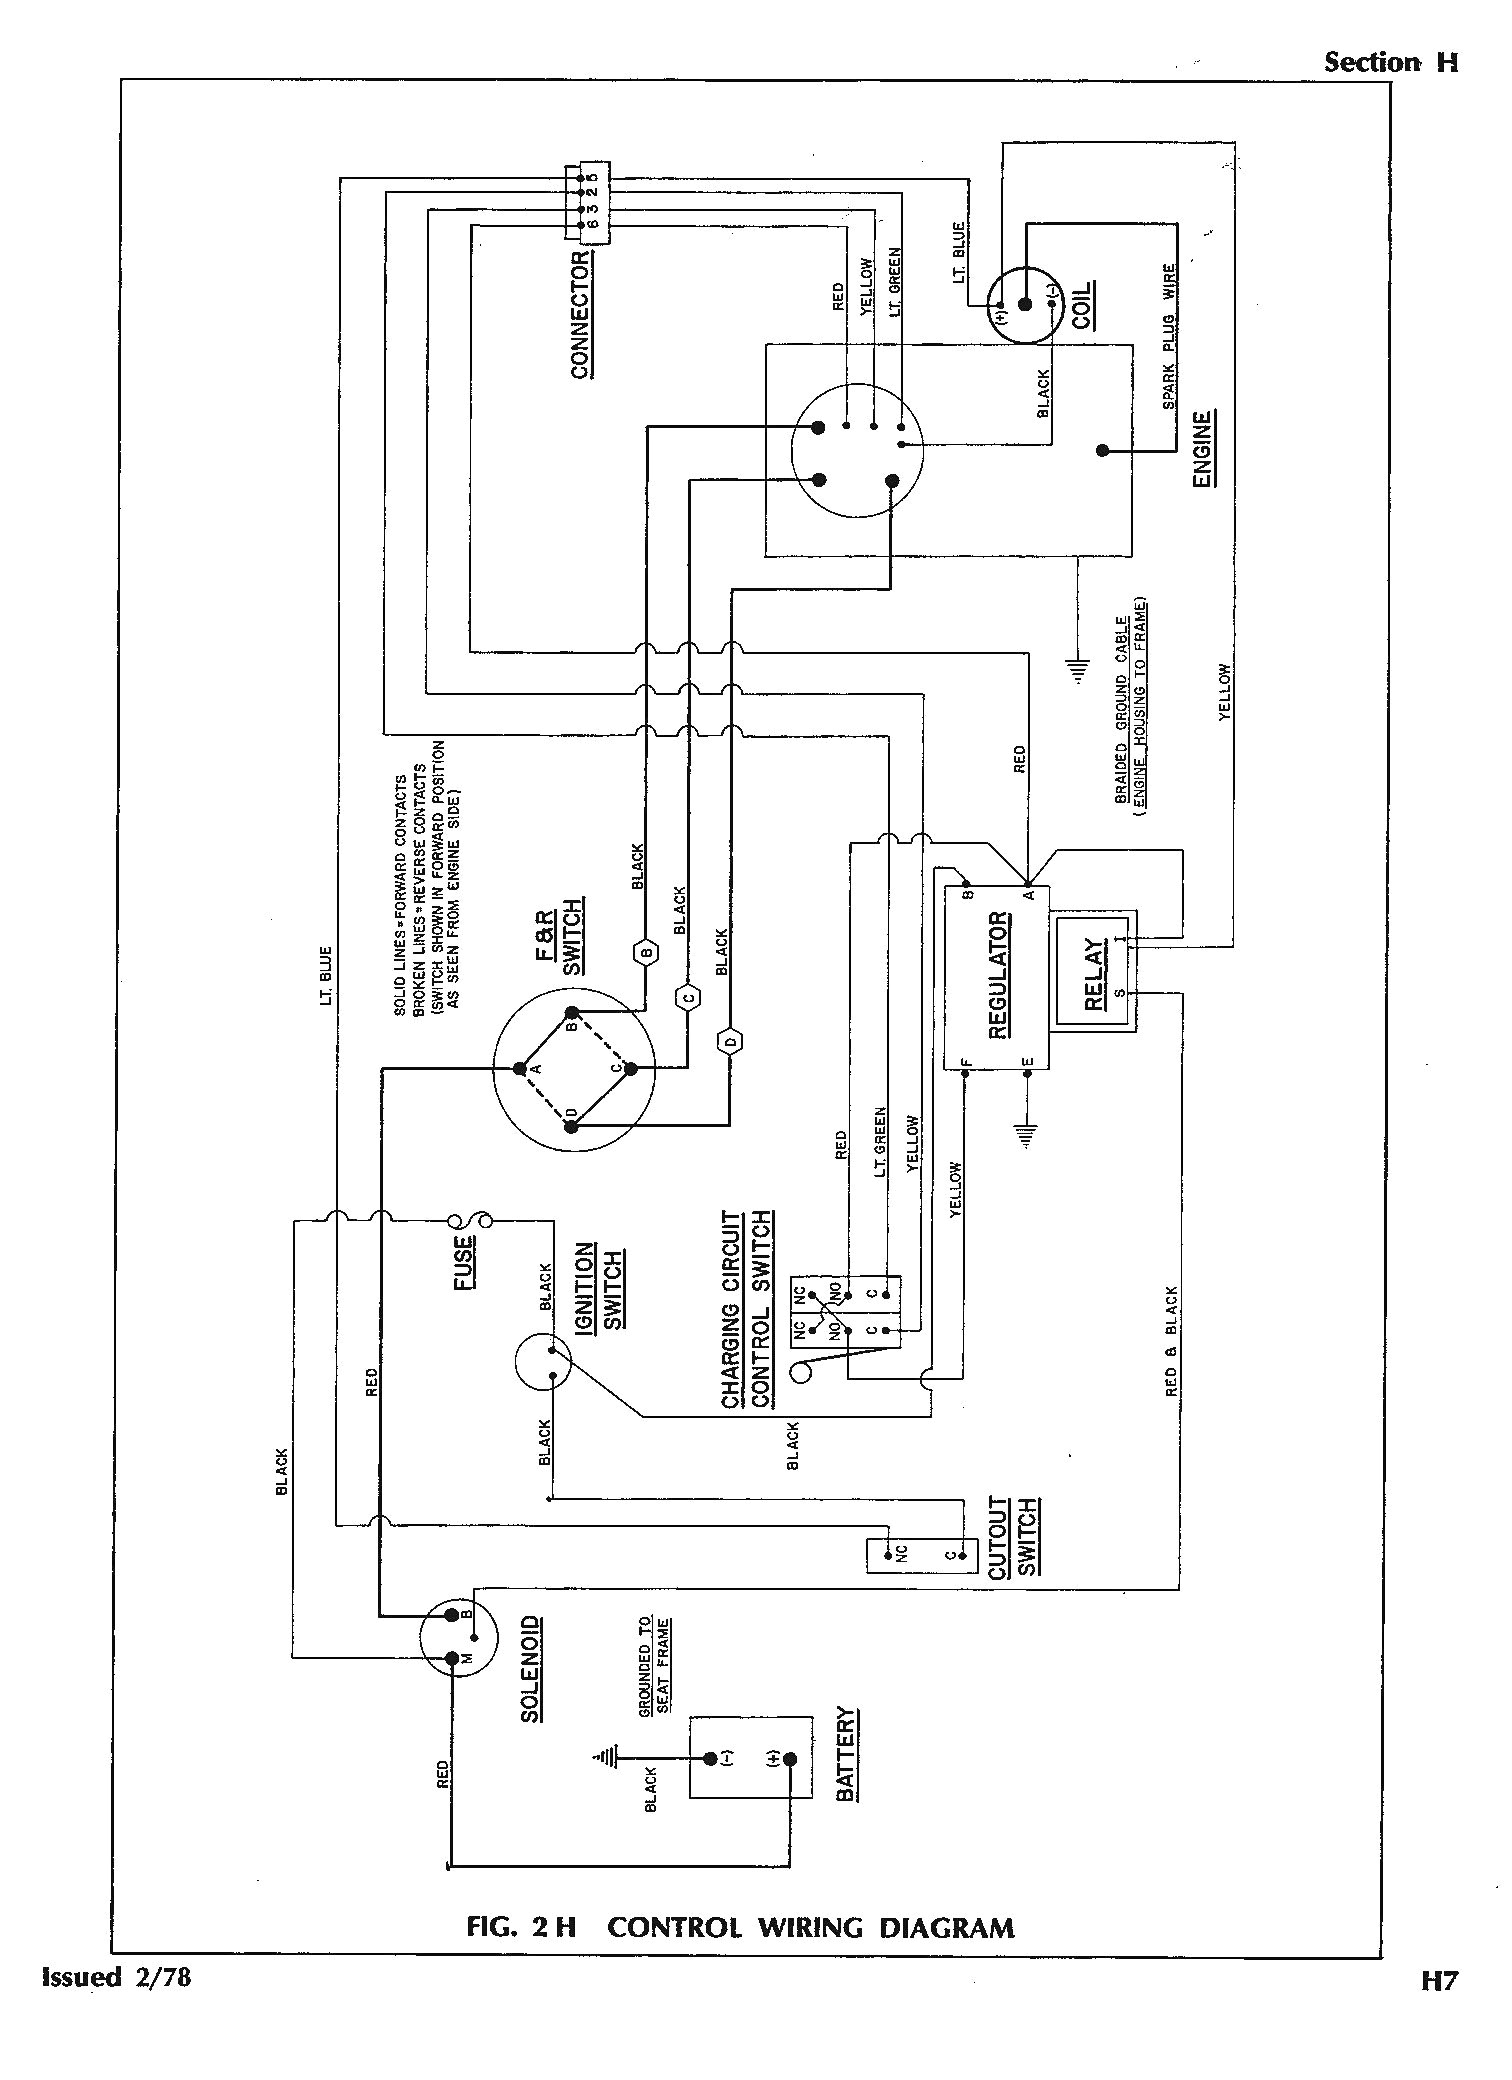 1991 ezgo wiring diagram wiring diagram used 1991 ezgo wiring diagram